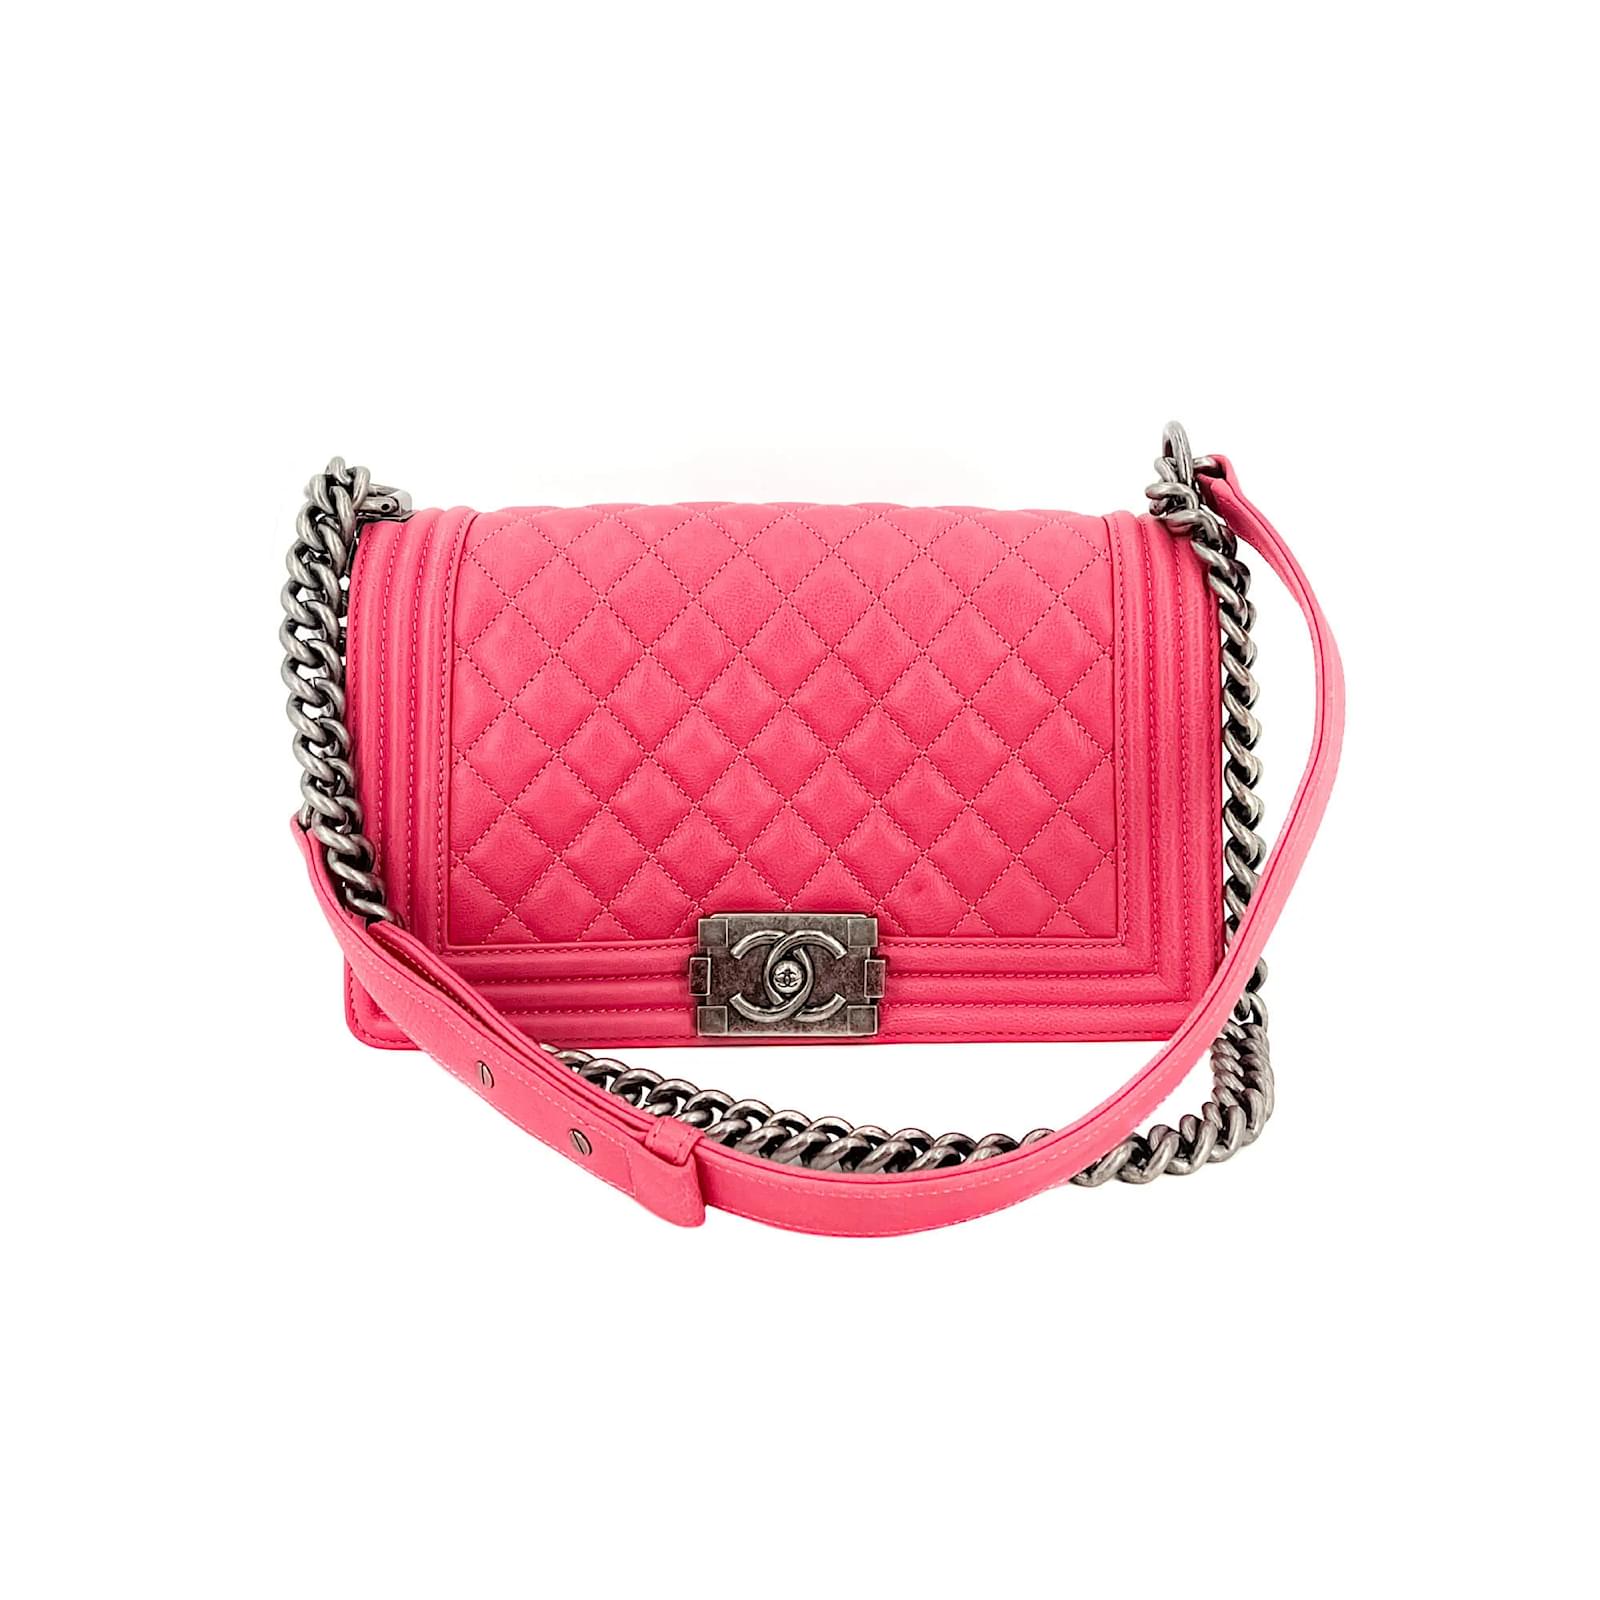 Handbags Chanel Boy Medium Quilted Calfskin Pink Bag